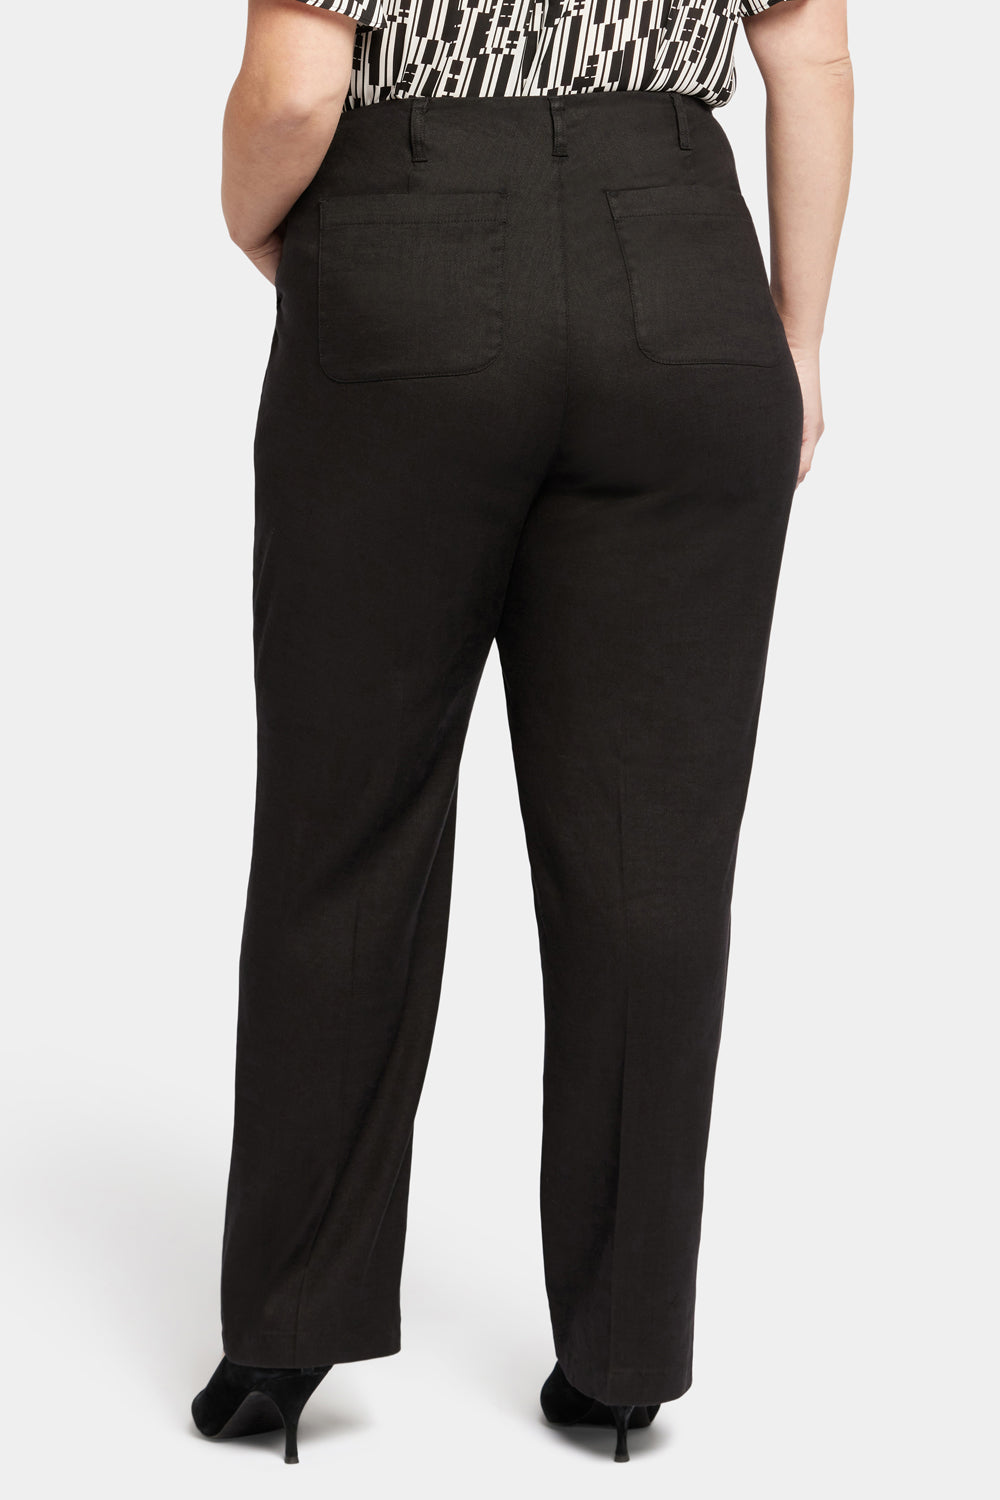 NYDJ Samantha Slim Black Ponte Knit Pant Style #11466 Women' Size 8